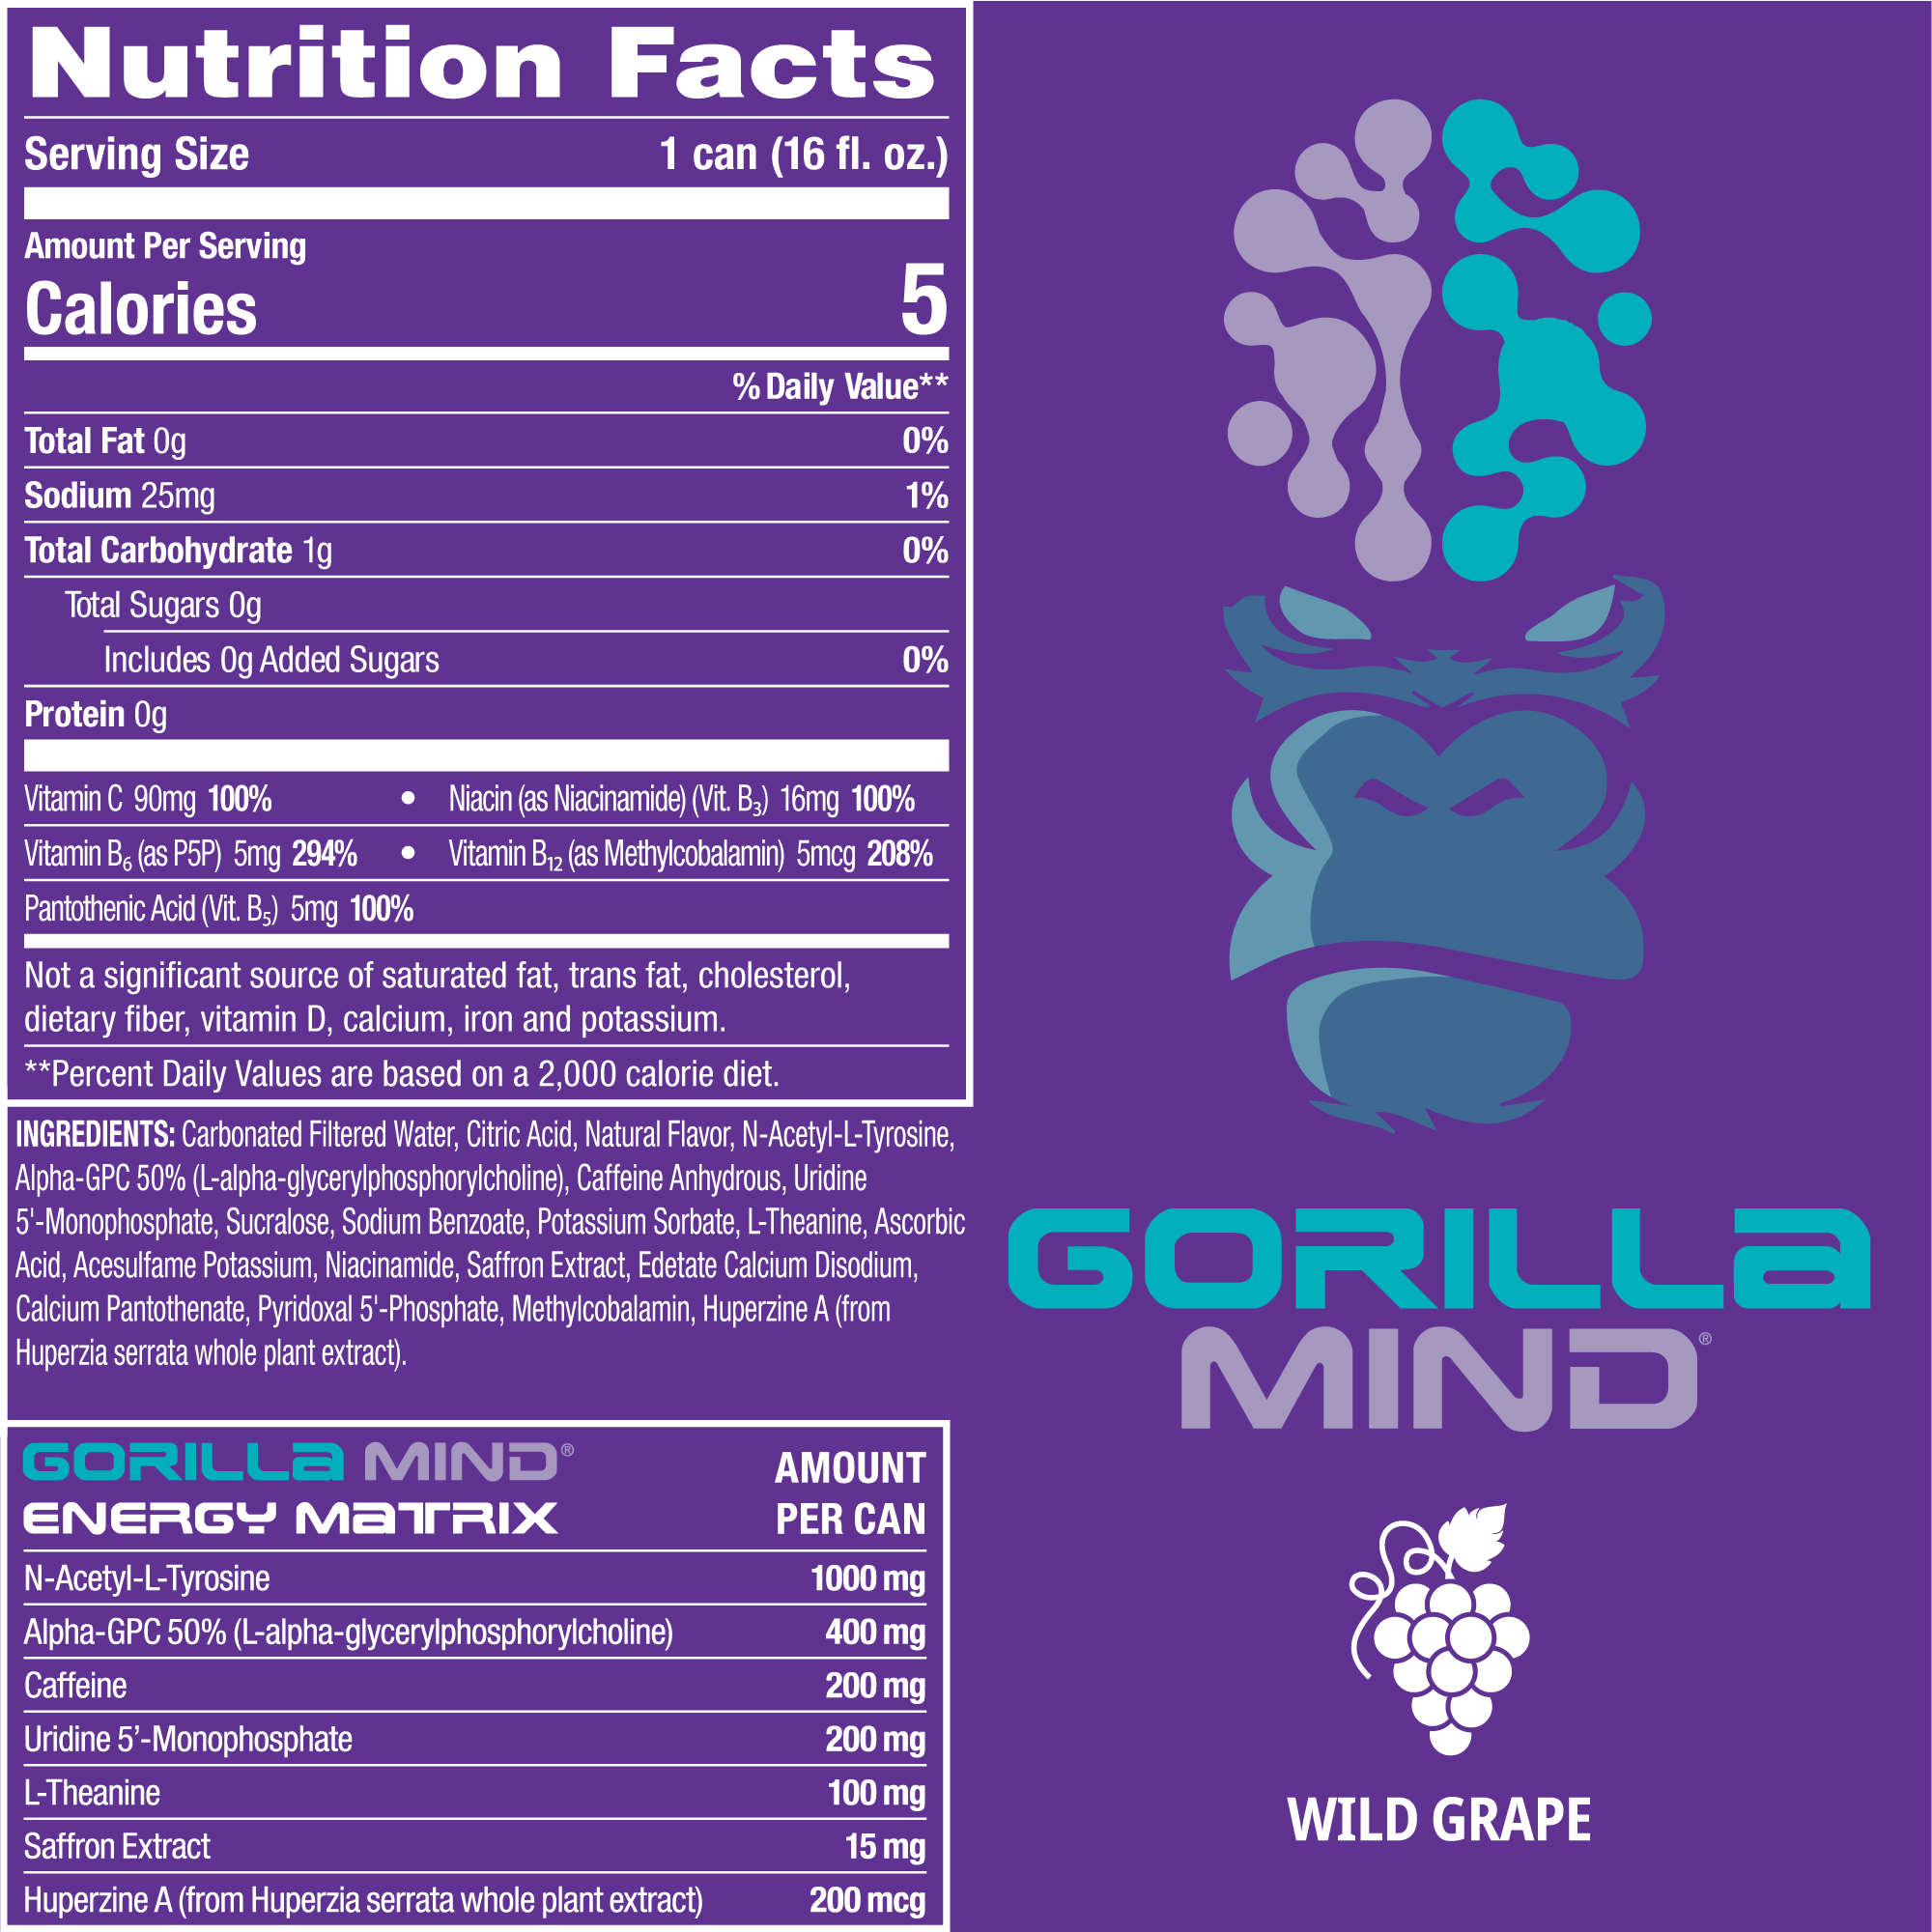 Gorilla Mind unveils its upcoming Tiger's Blood Gorilla Mind Energy